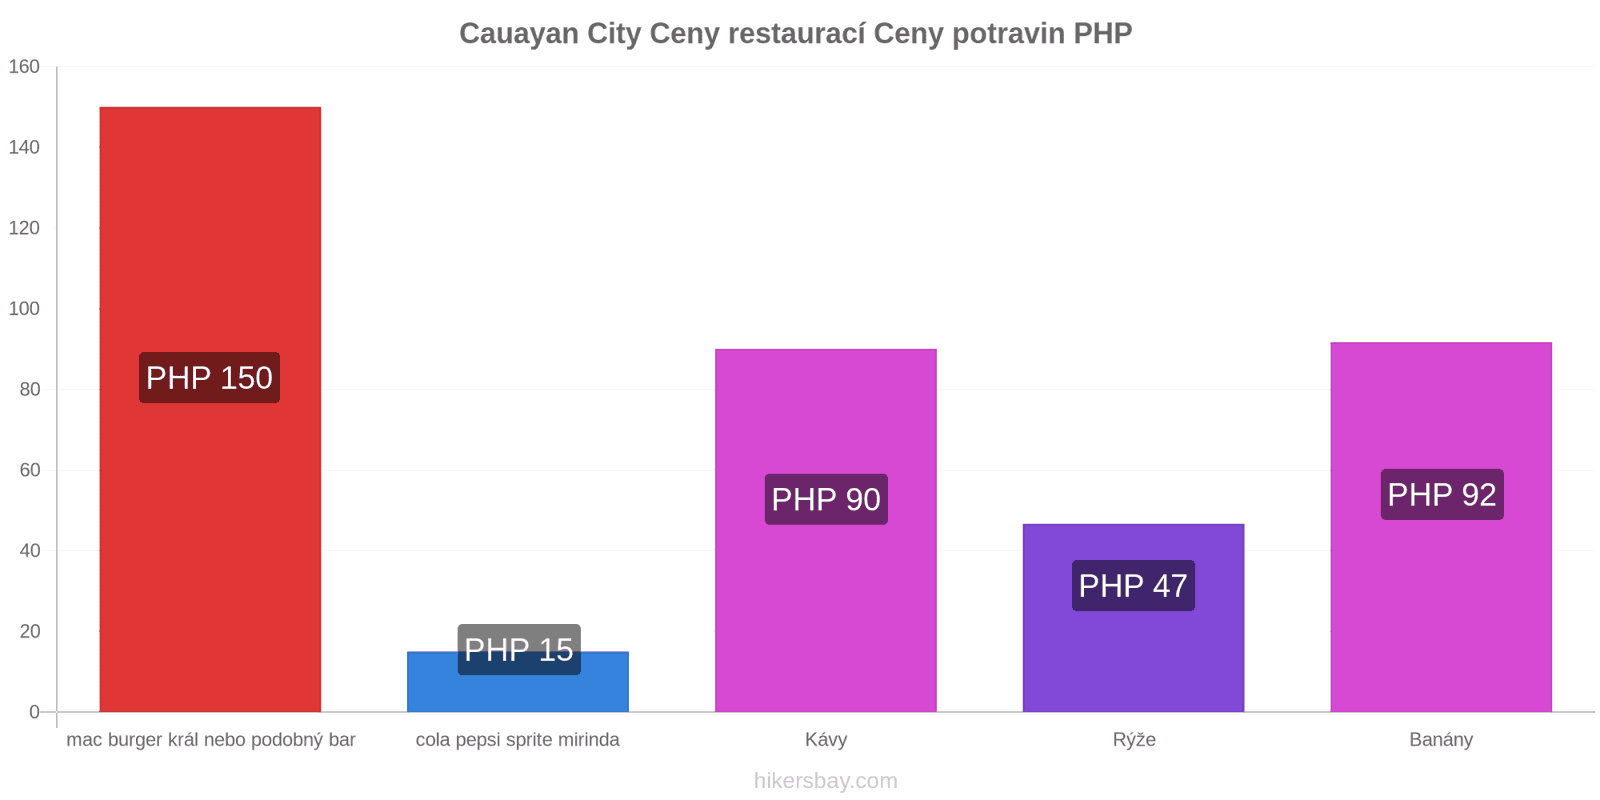 Cauayan City změny cen hikersbay.com